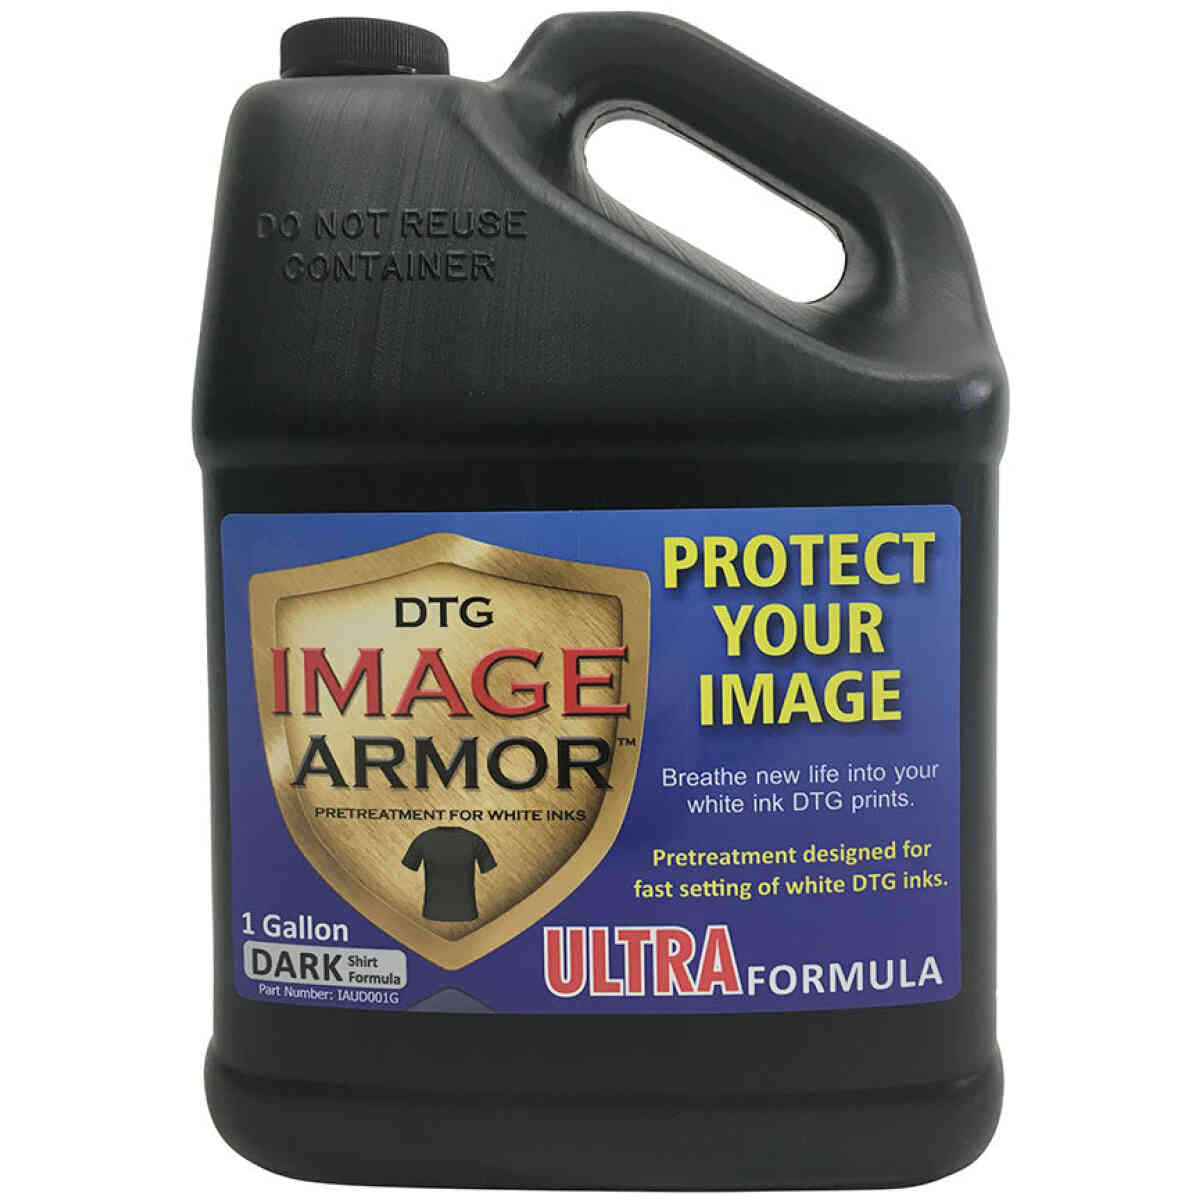 IMAGE ARMOR ULTRA Formula Blue Label